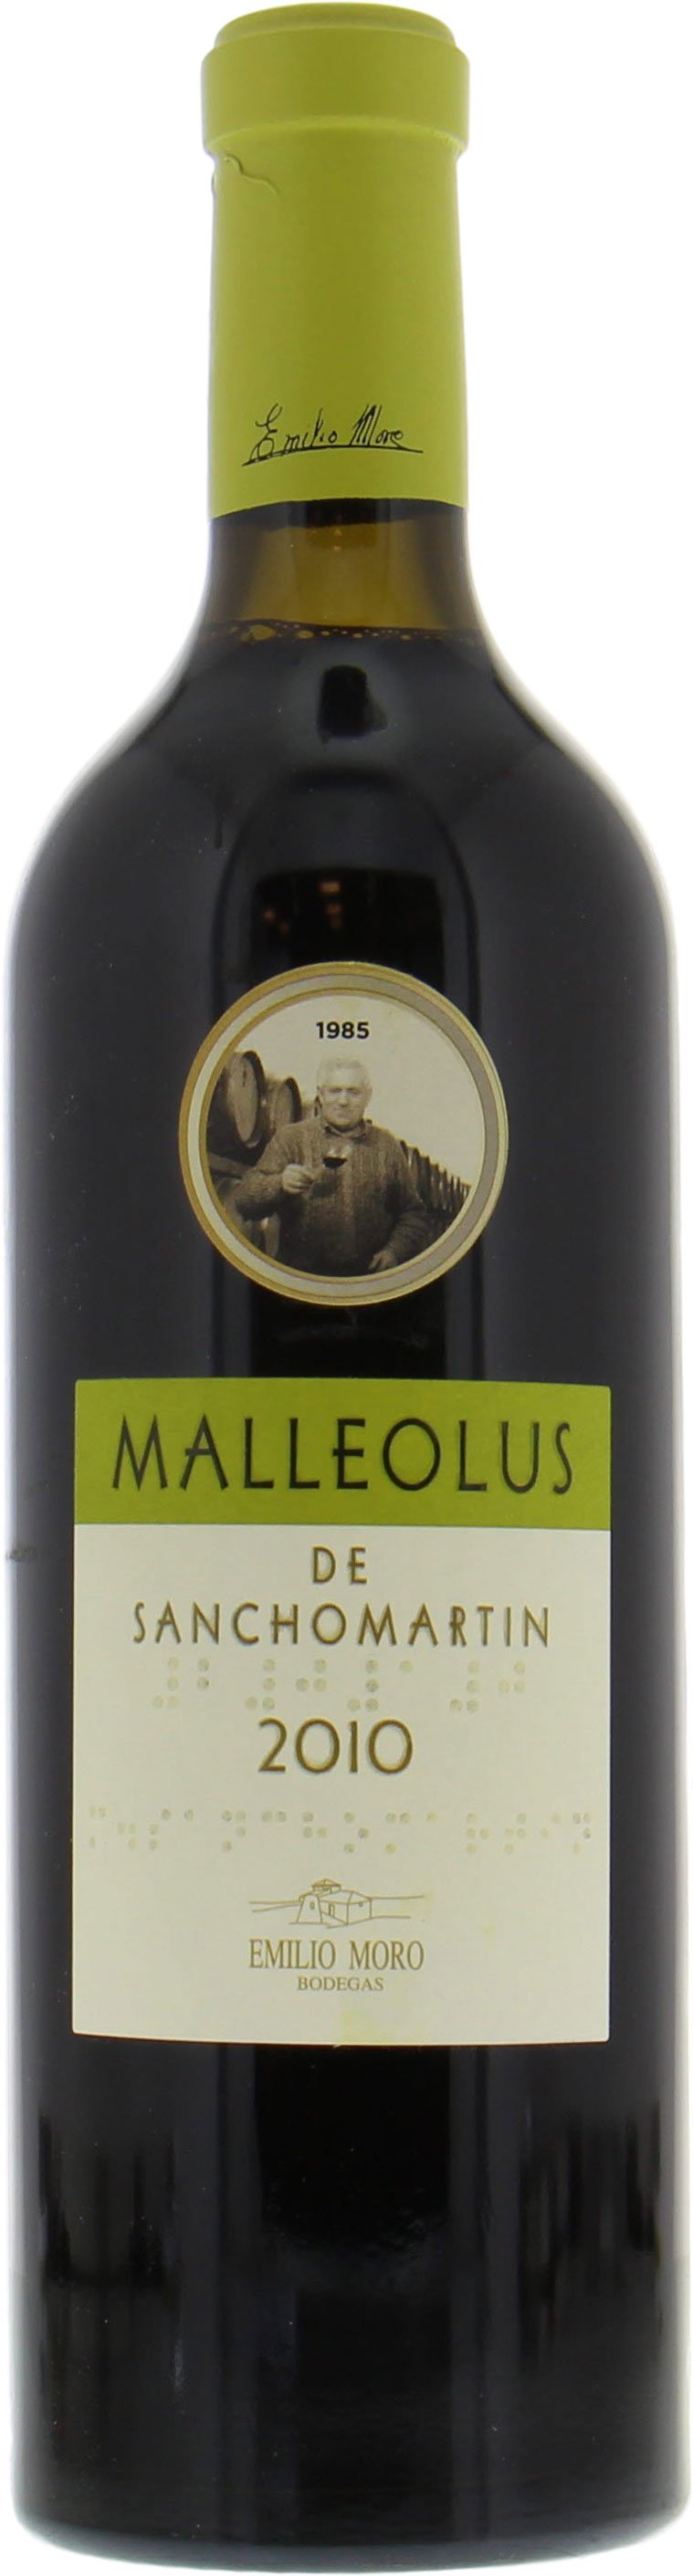 Bodegas Emilio Moro - Malleolus de Sancho Martin 2010